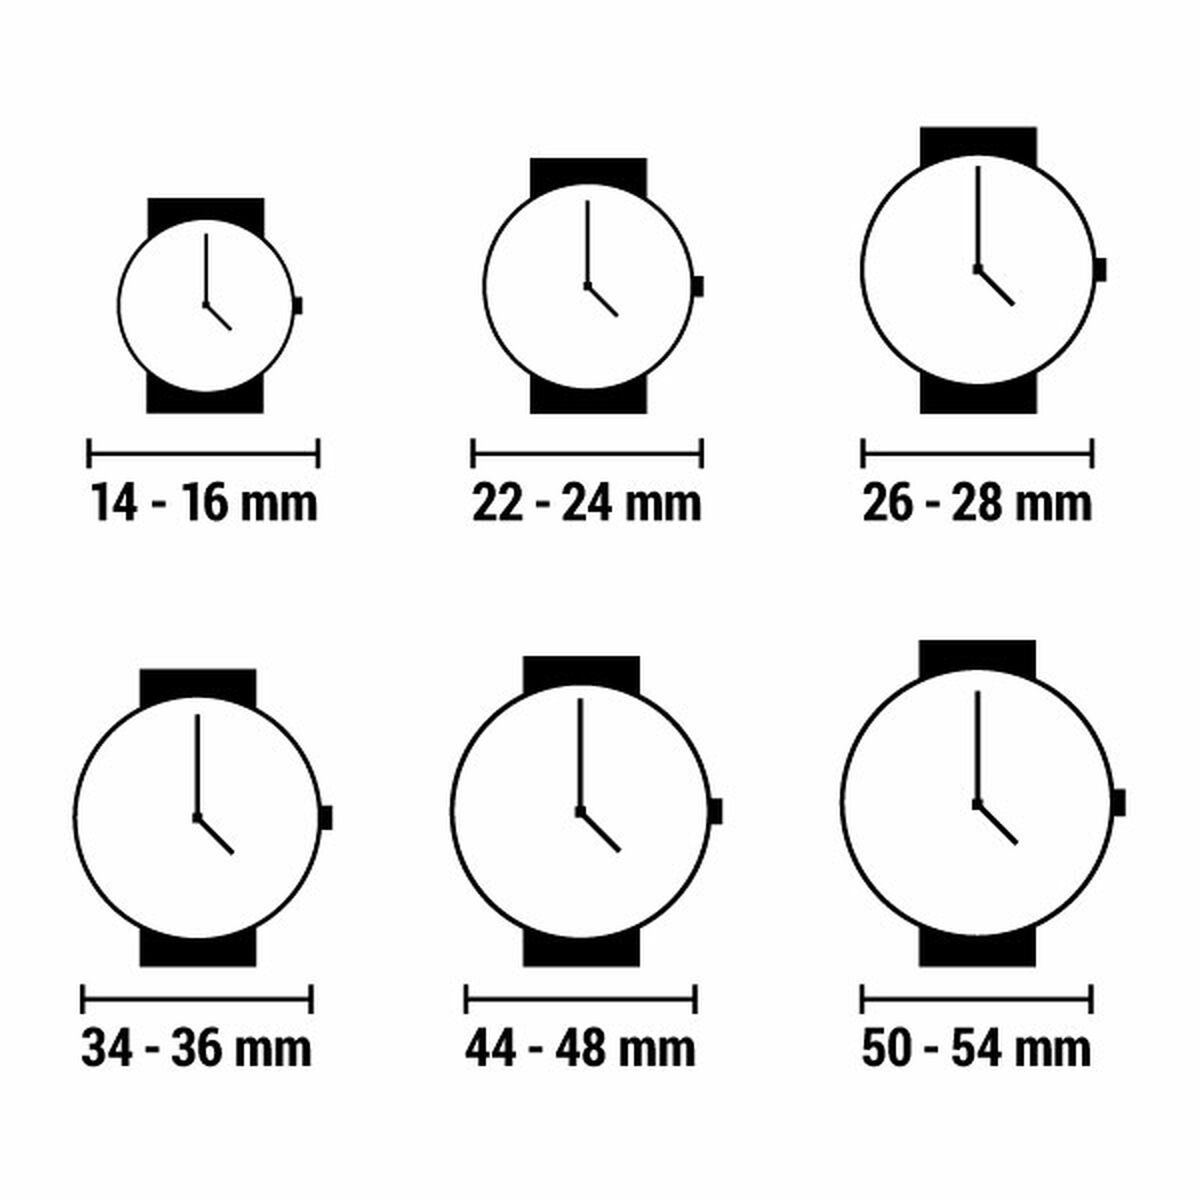 Horloge Dames Mark Maddox MC6008-10